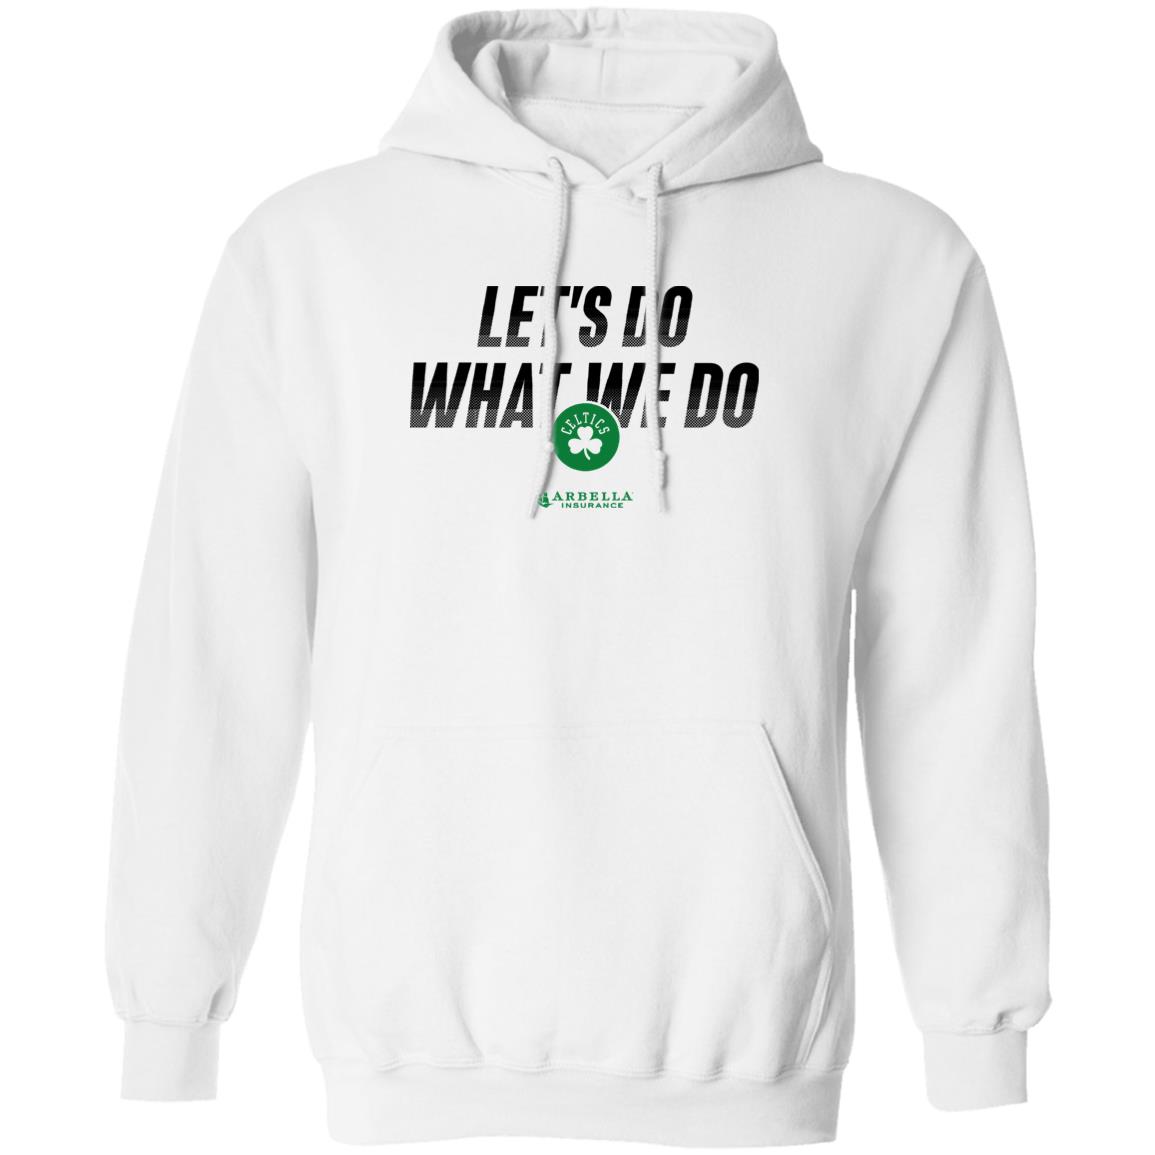 Celtics Abbella Let'S Do What We Do Shirt Panetory – Graphic Design Apparel &Amp; Accessories Online